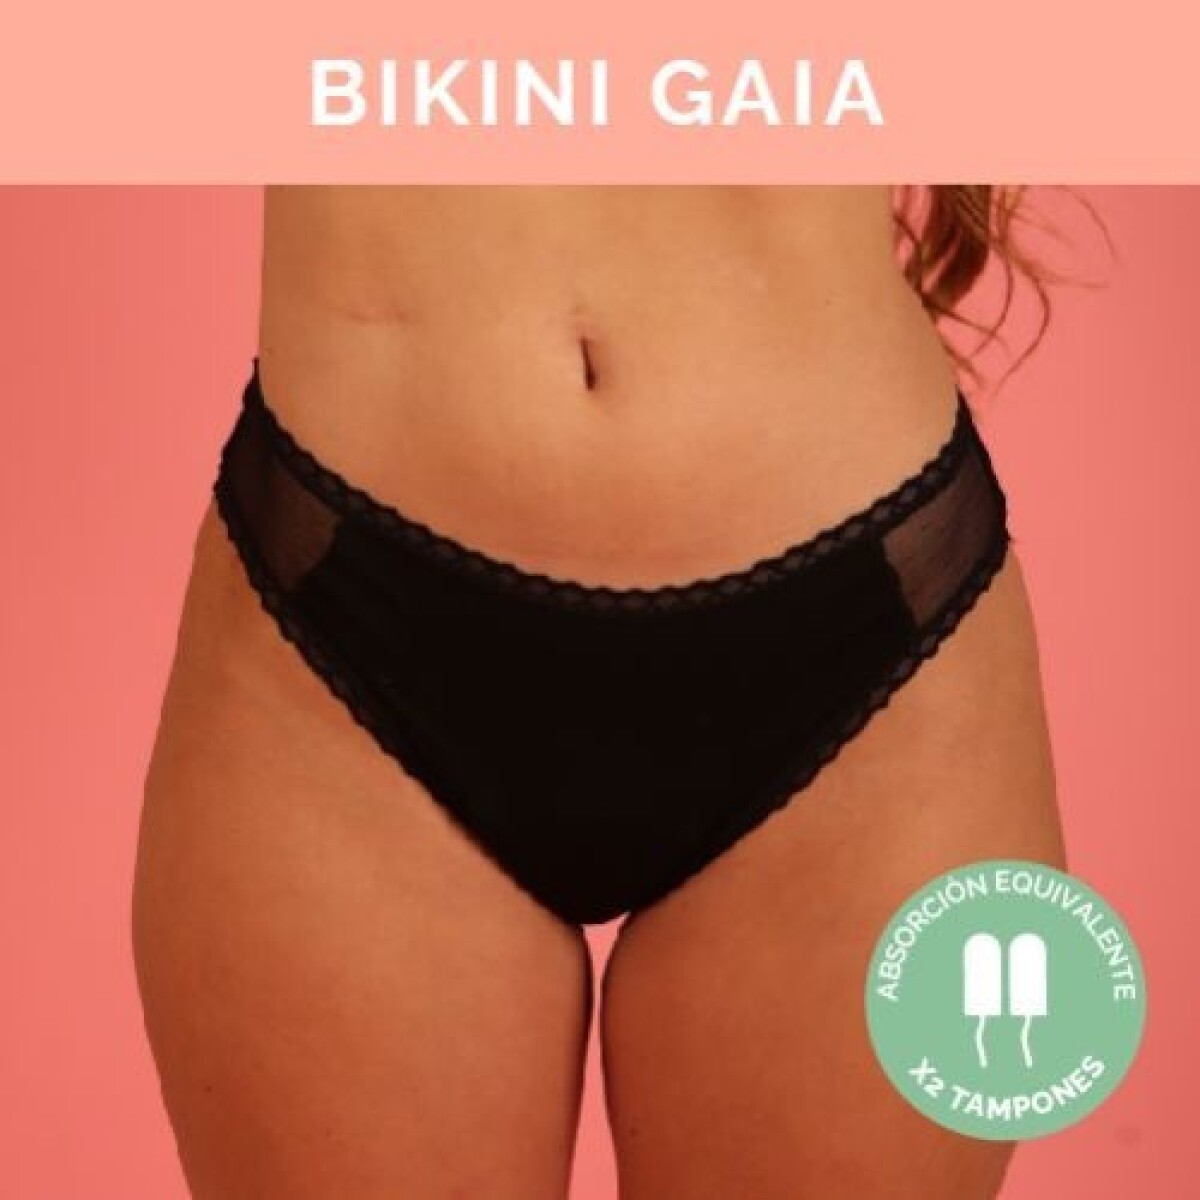 Bombacha Menstrual Bikini Gaia Puntilla Talle M 